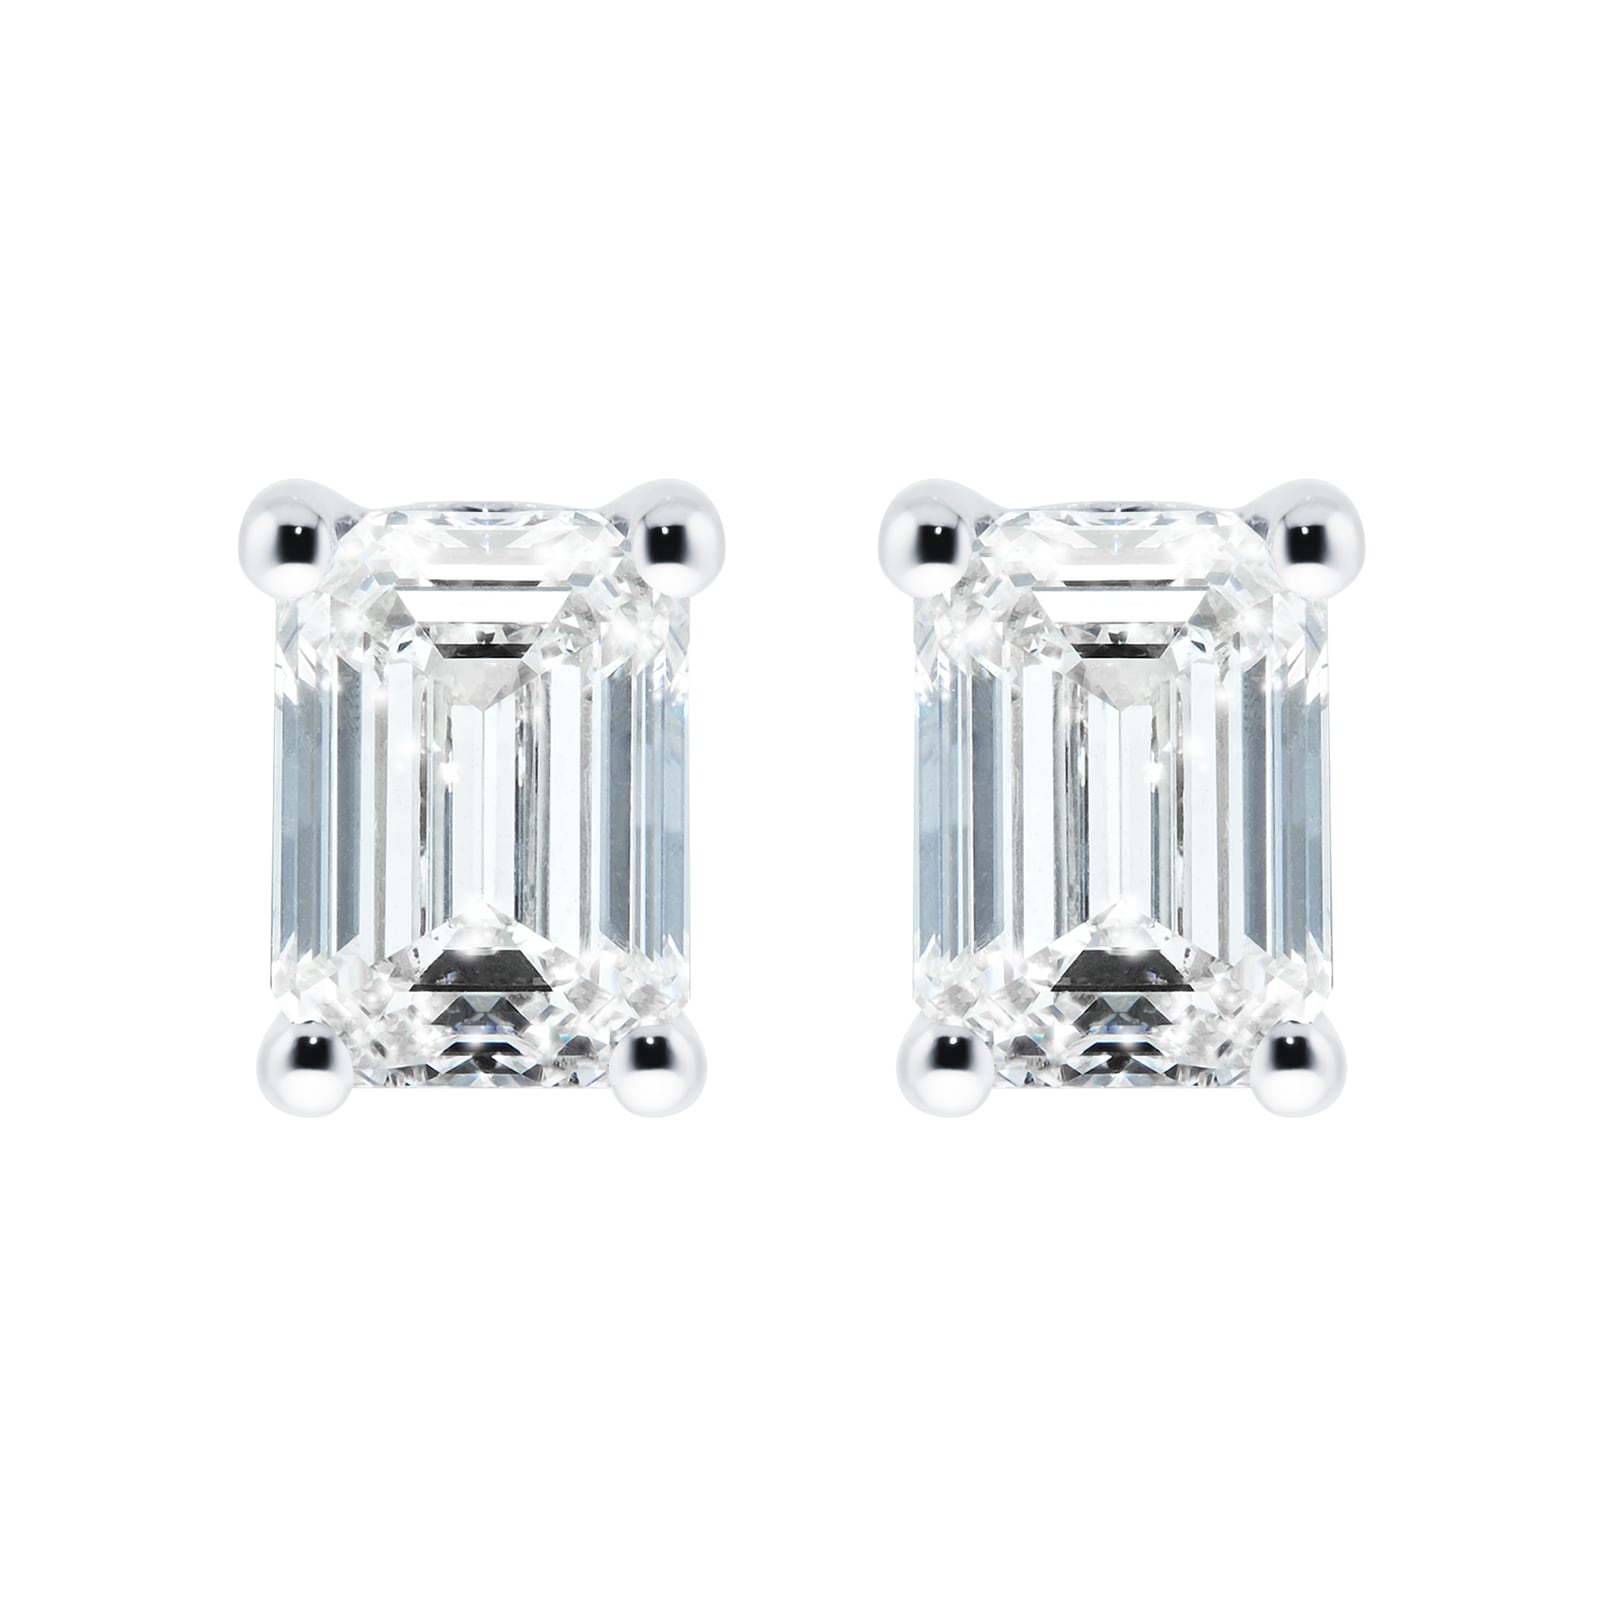 Platinum 1.40cttw Emerald Cut Diamond Stud Earrings